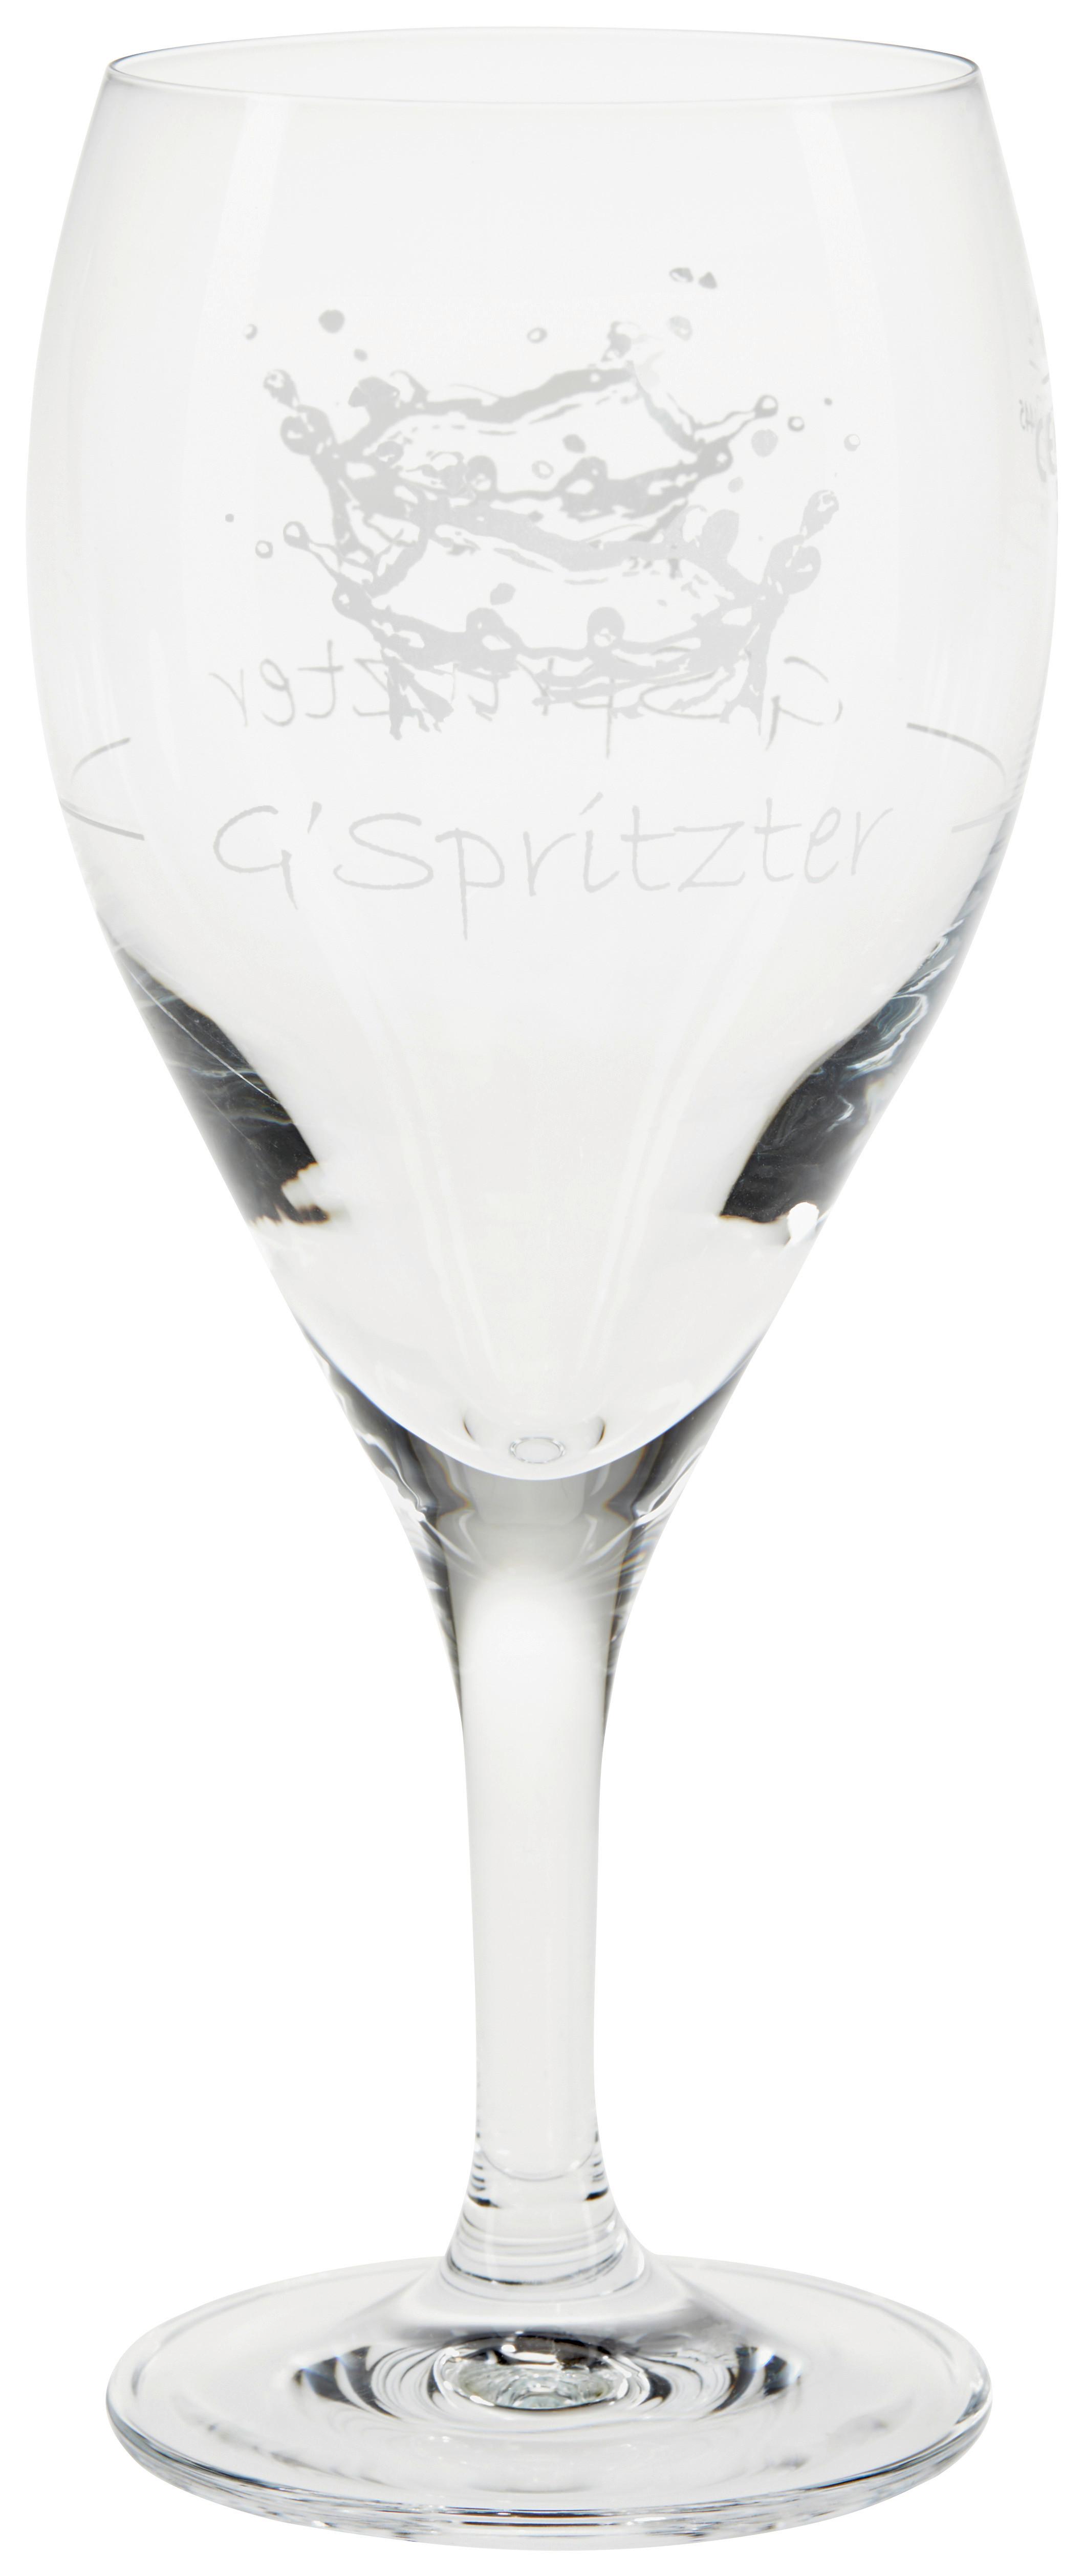 Spritzerglas G'spritzter, ca. 250 ml - Klar, Design, Glas (8,1/19cm) - Luca Bessoni